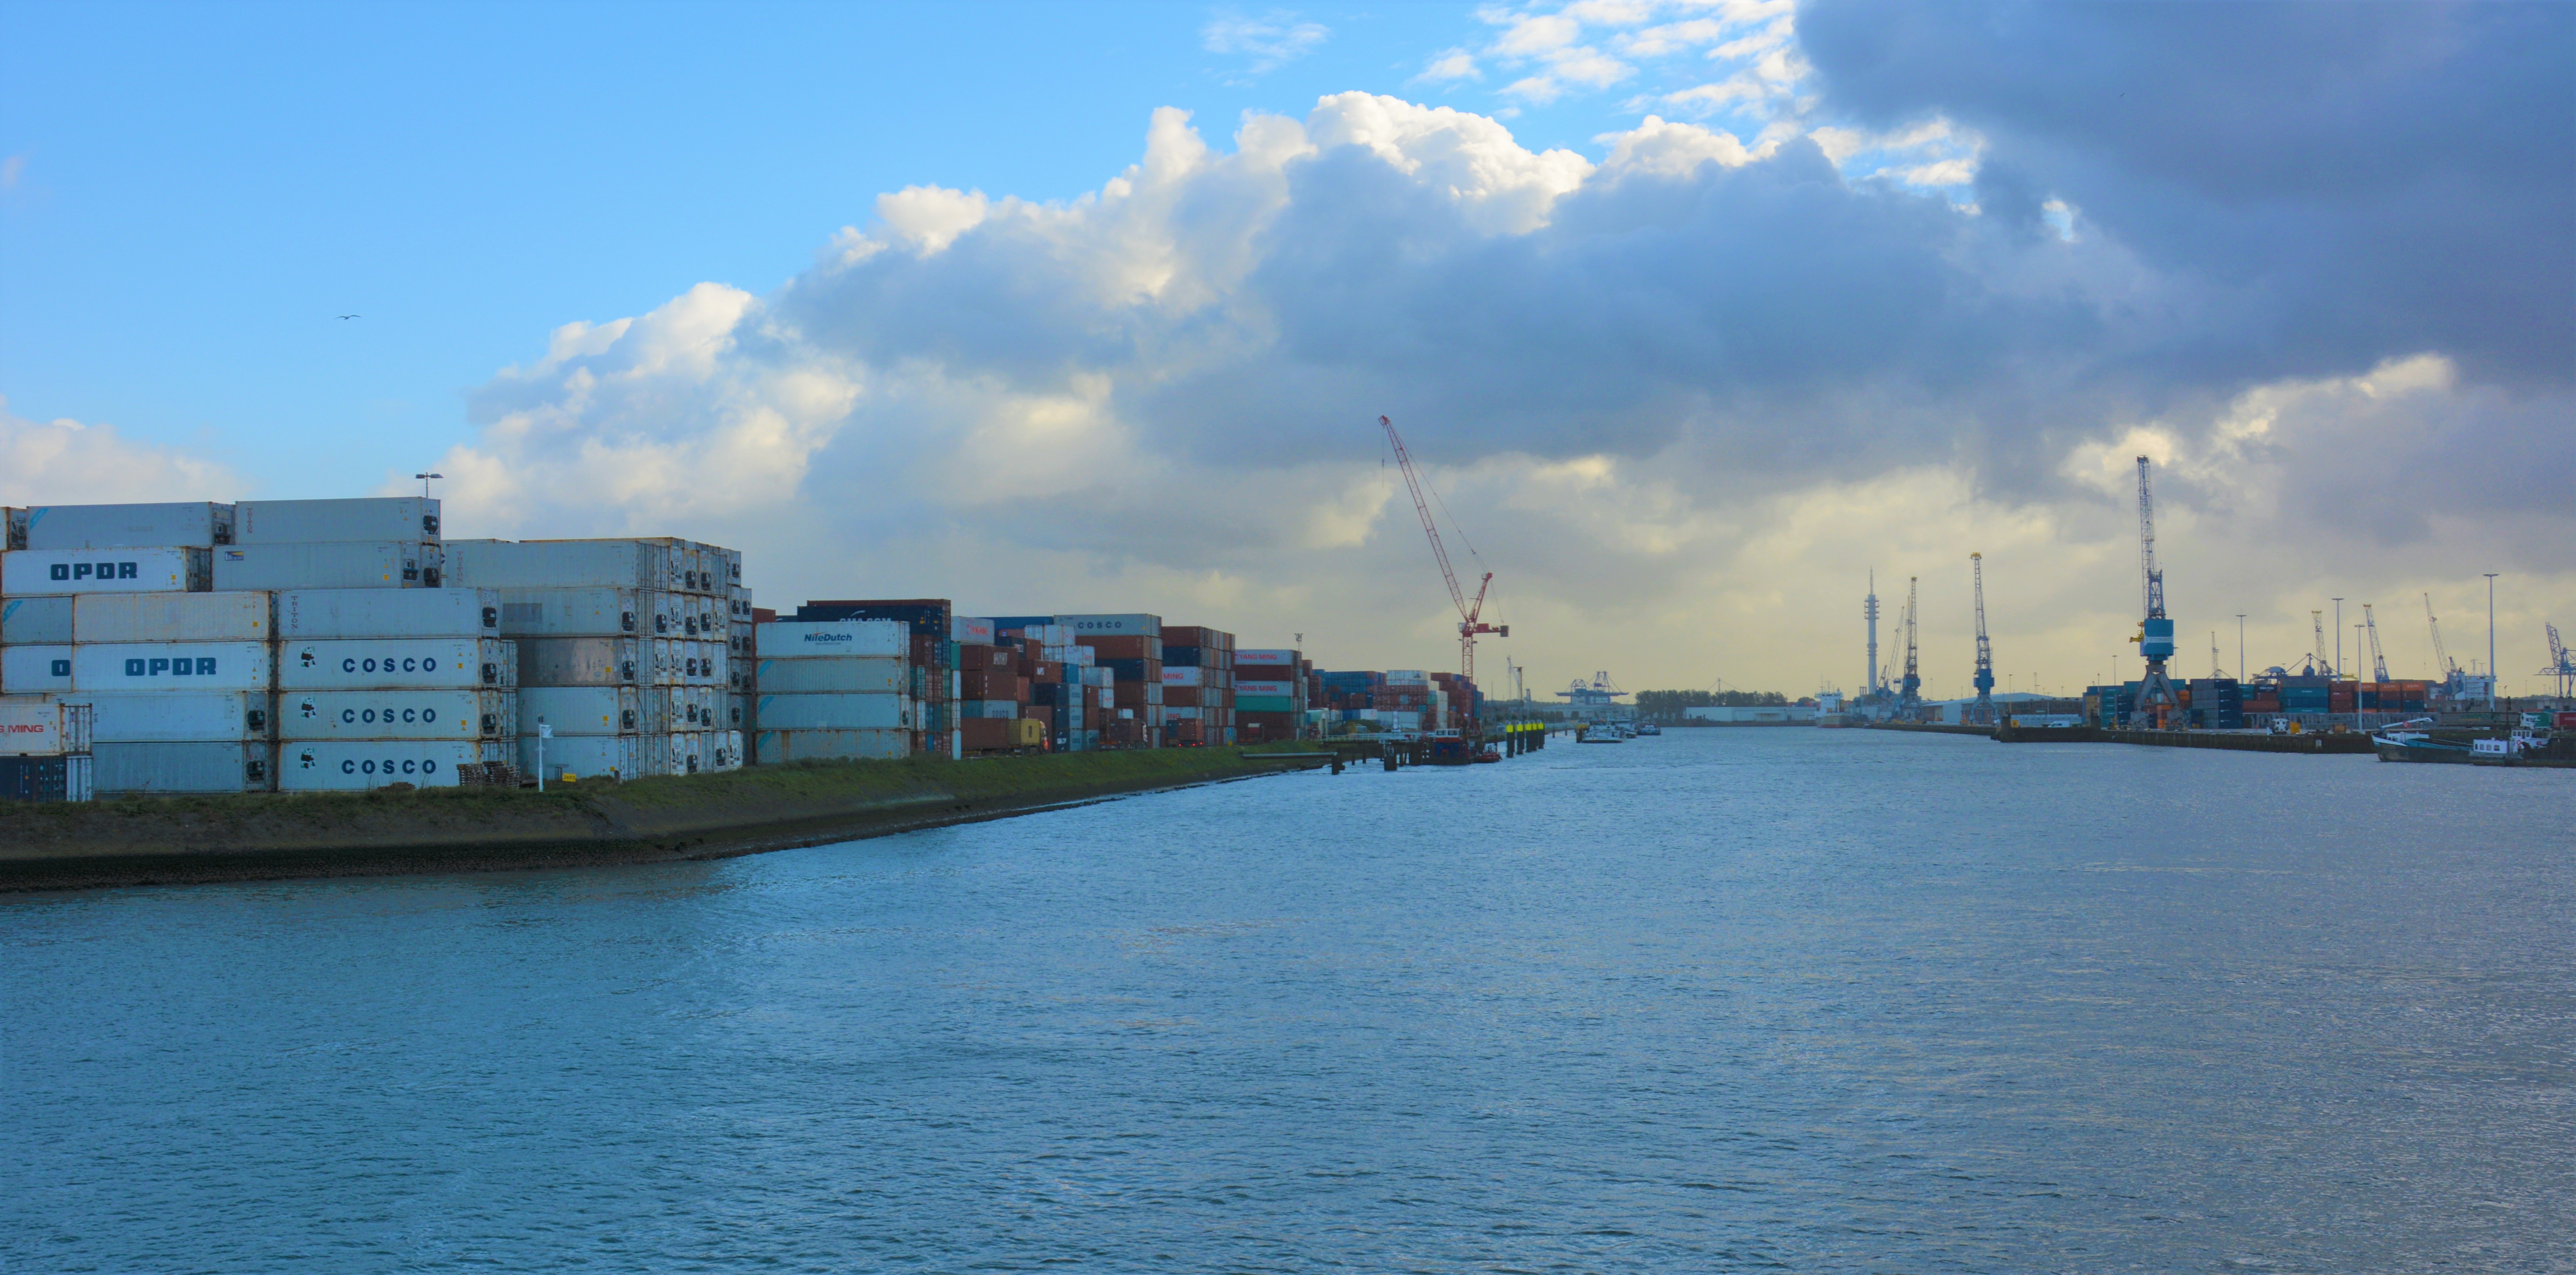 waterway in the port of Rotterdam